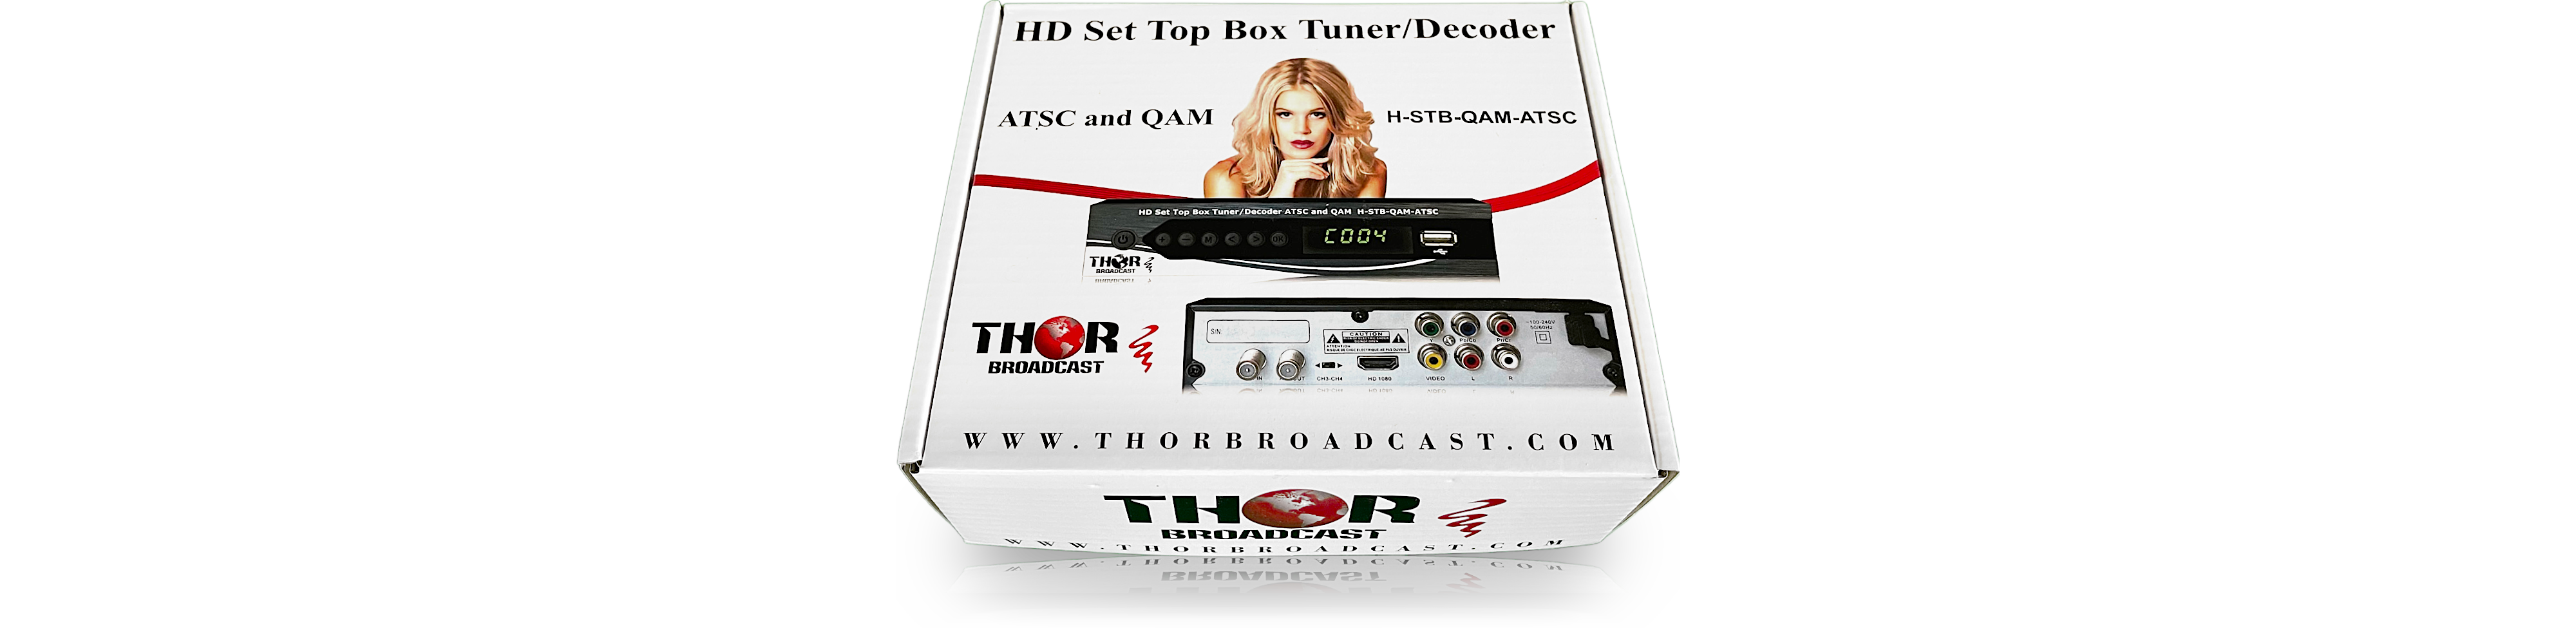 Decodificador TDT HD Usb +Control +HDMI +RCA Digital Sintonizador TV -  RapidHardware